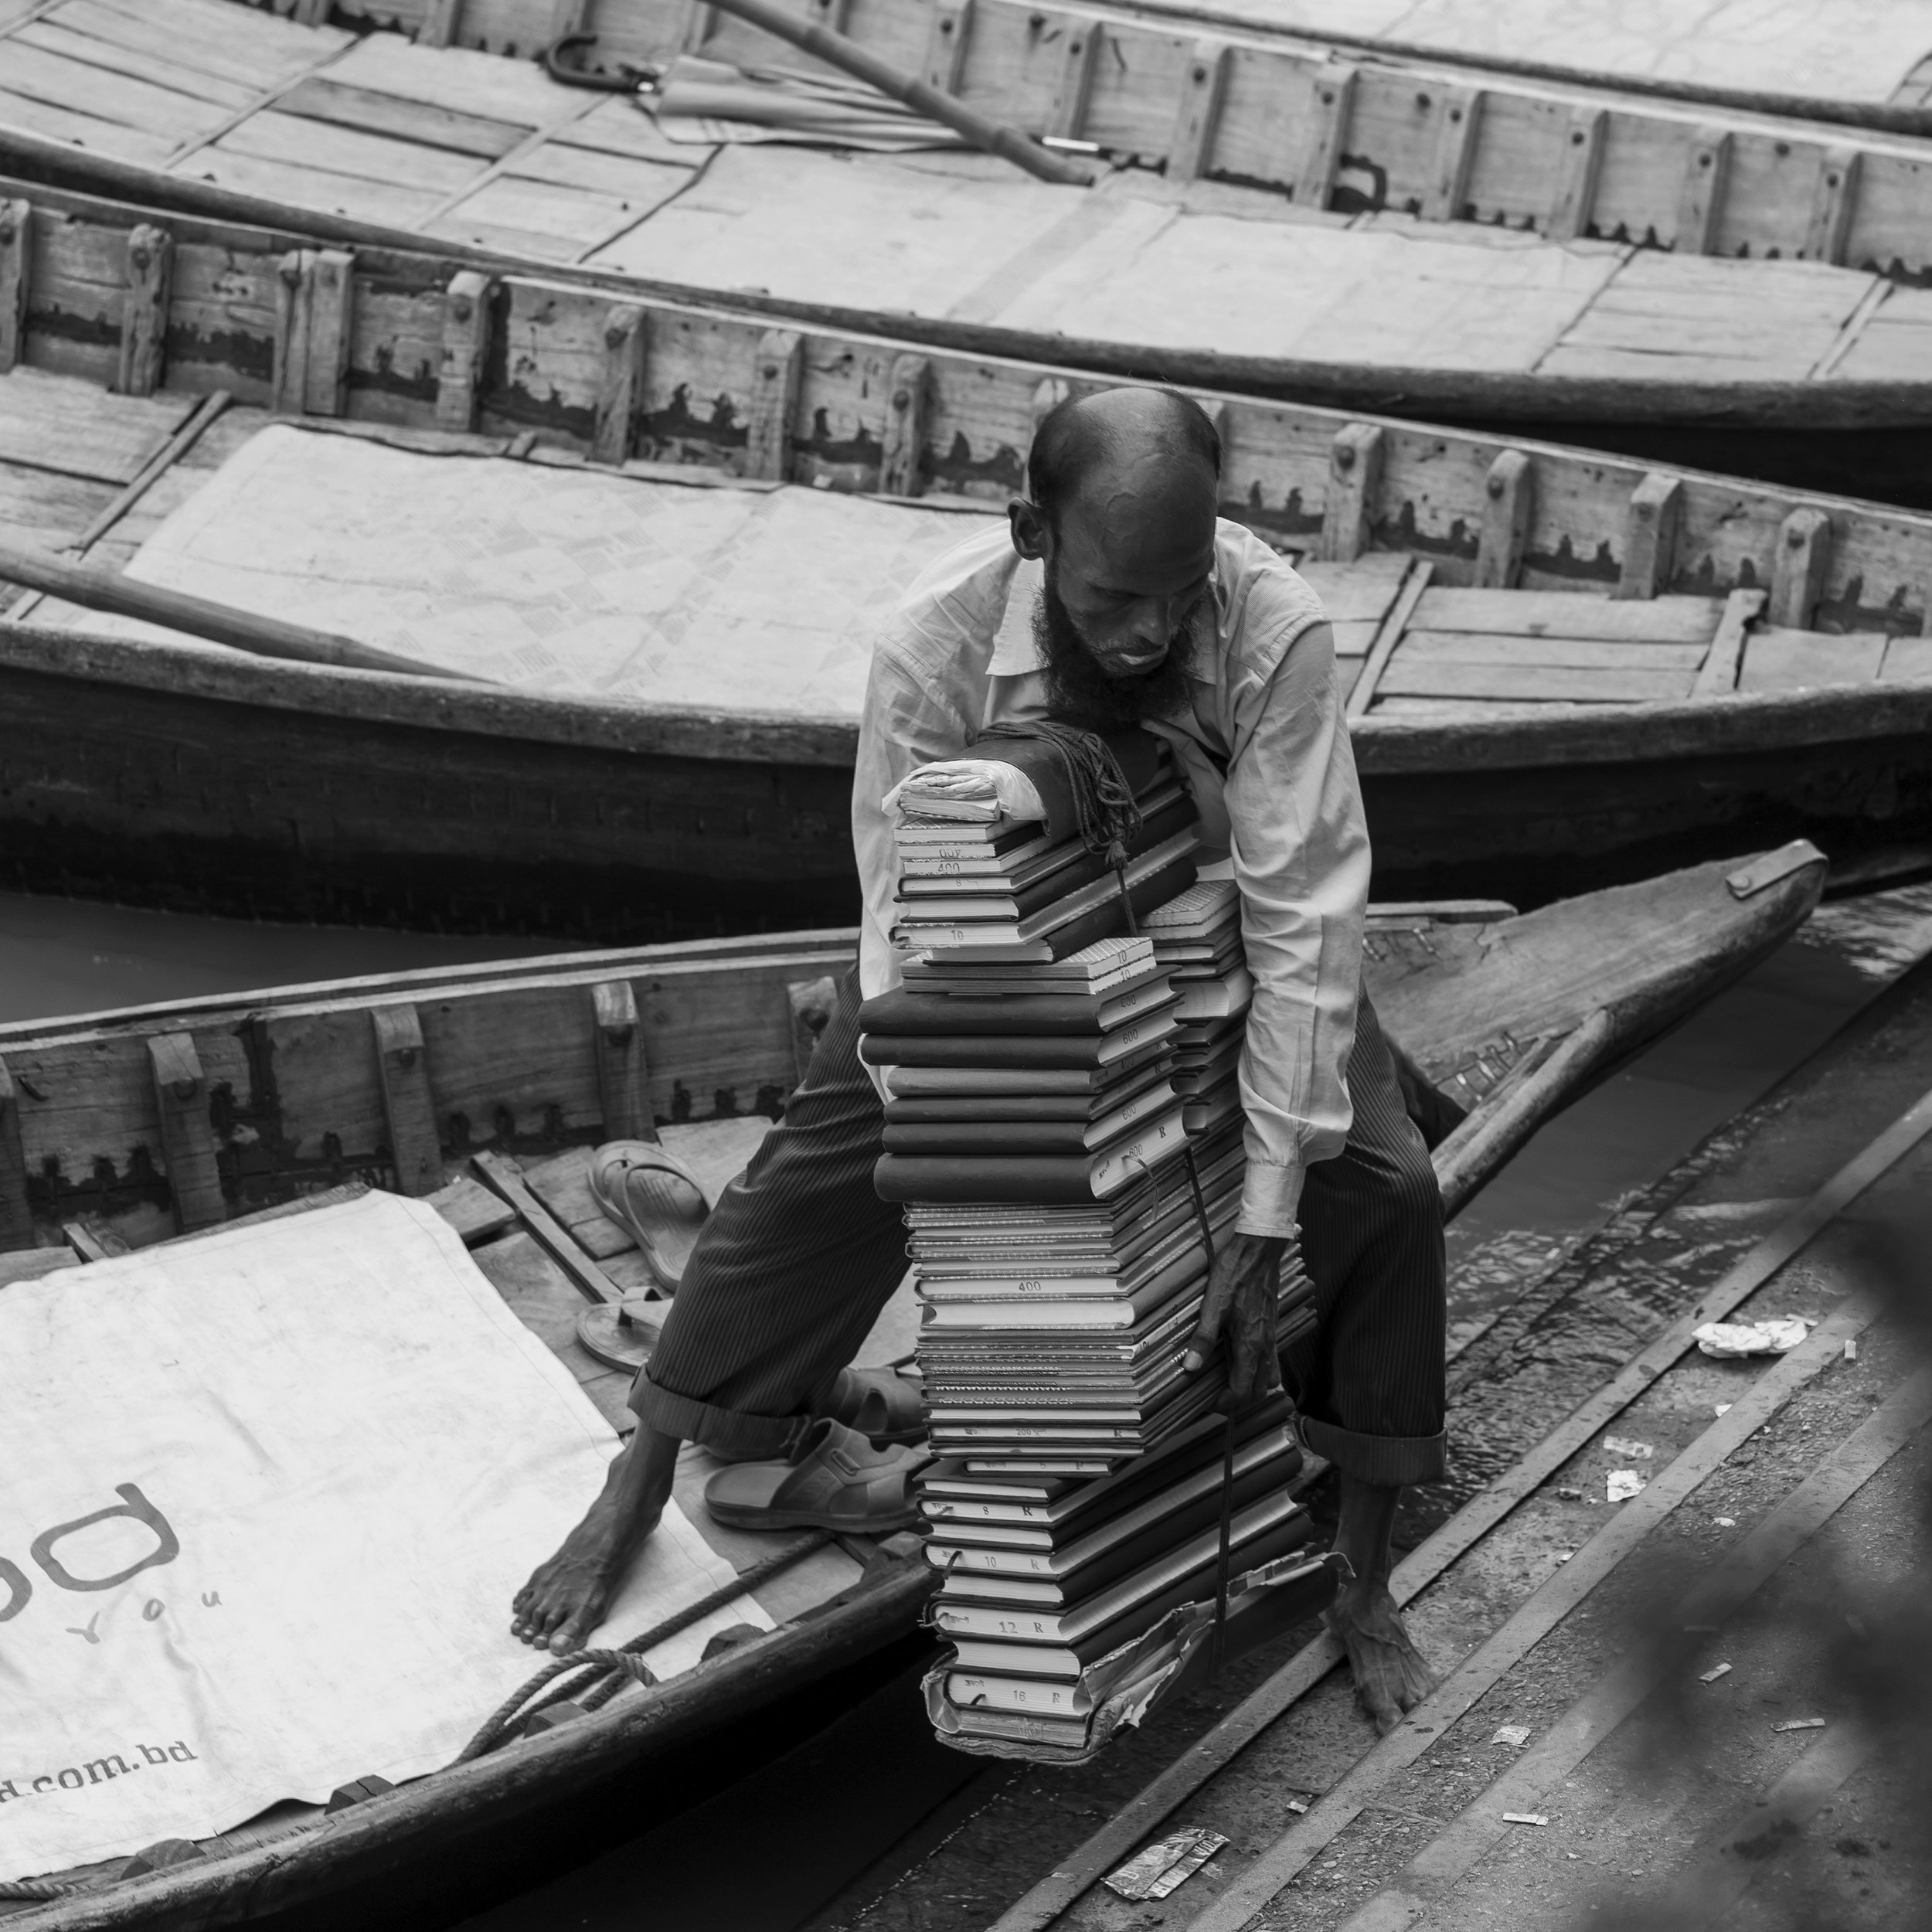 Yearman, Keith-Dhaka, Bangladesh - Offloading books.jpg